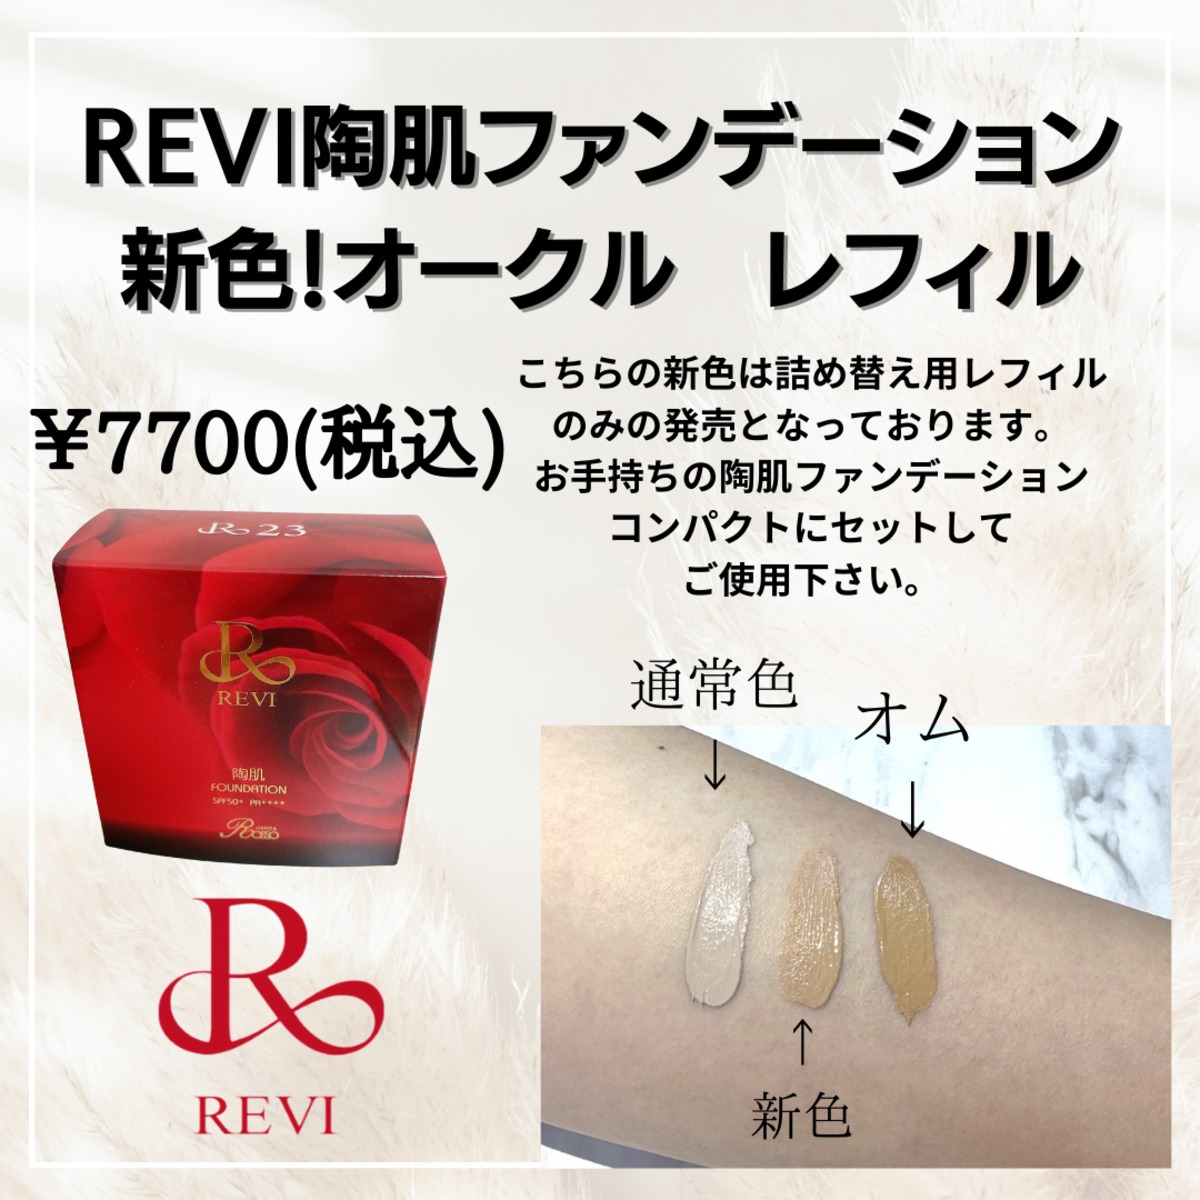 REVI 【新色】陶肌ファンデーション オークル レフィル | REVI shop